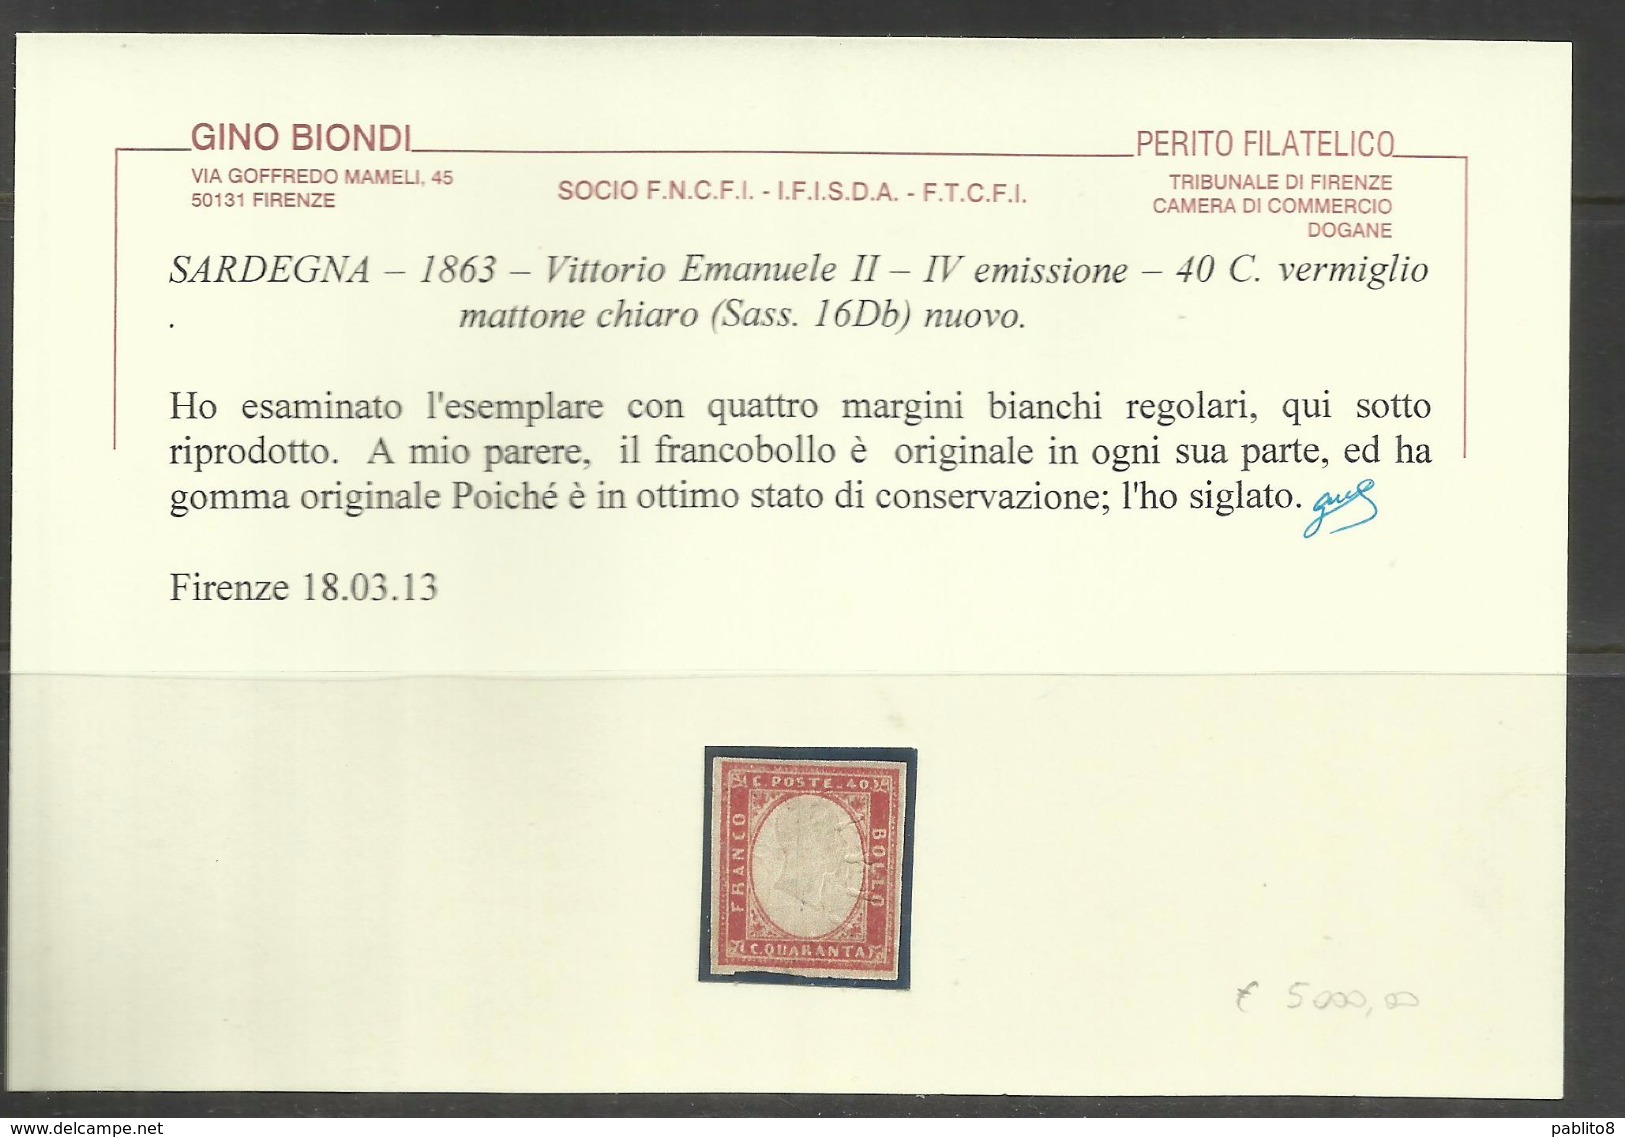 ANTICHI STATI SARDEGNA 1861 VITTORIO EMANUELE IV EMISSIONE CENT 40 40c VERMIGLIO MATTONE CHIARO MLH - Sardegna